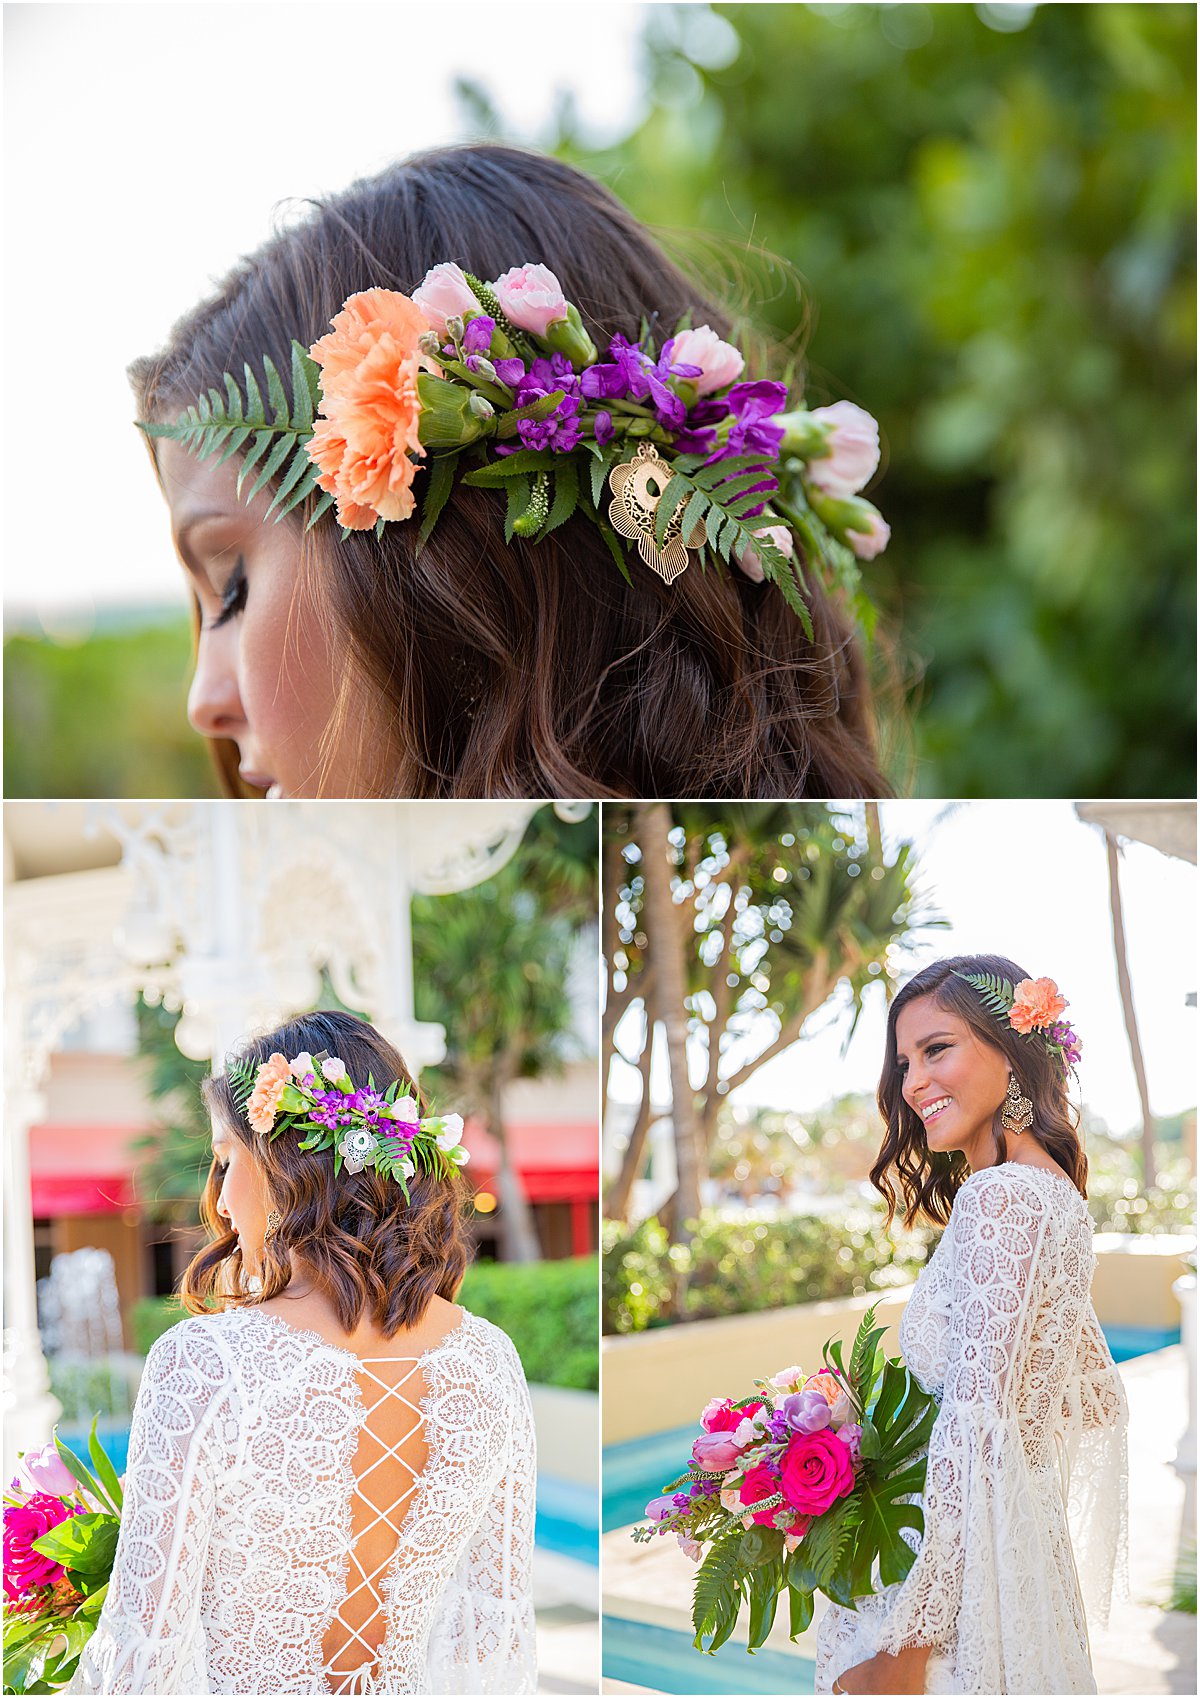 Tropical Chic Wedding Bridal Flower Crown | Marriott Singer Island | Palm Beach, FL | Married in Palm Beach | www.marriedinpalmbeach.com | Krystal Zaskey Photography